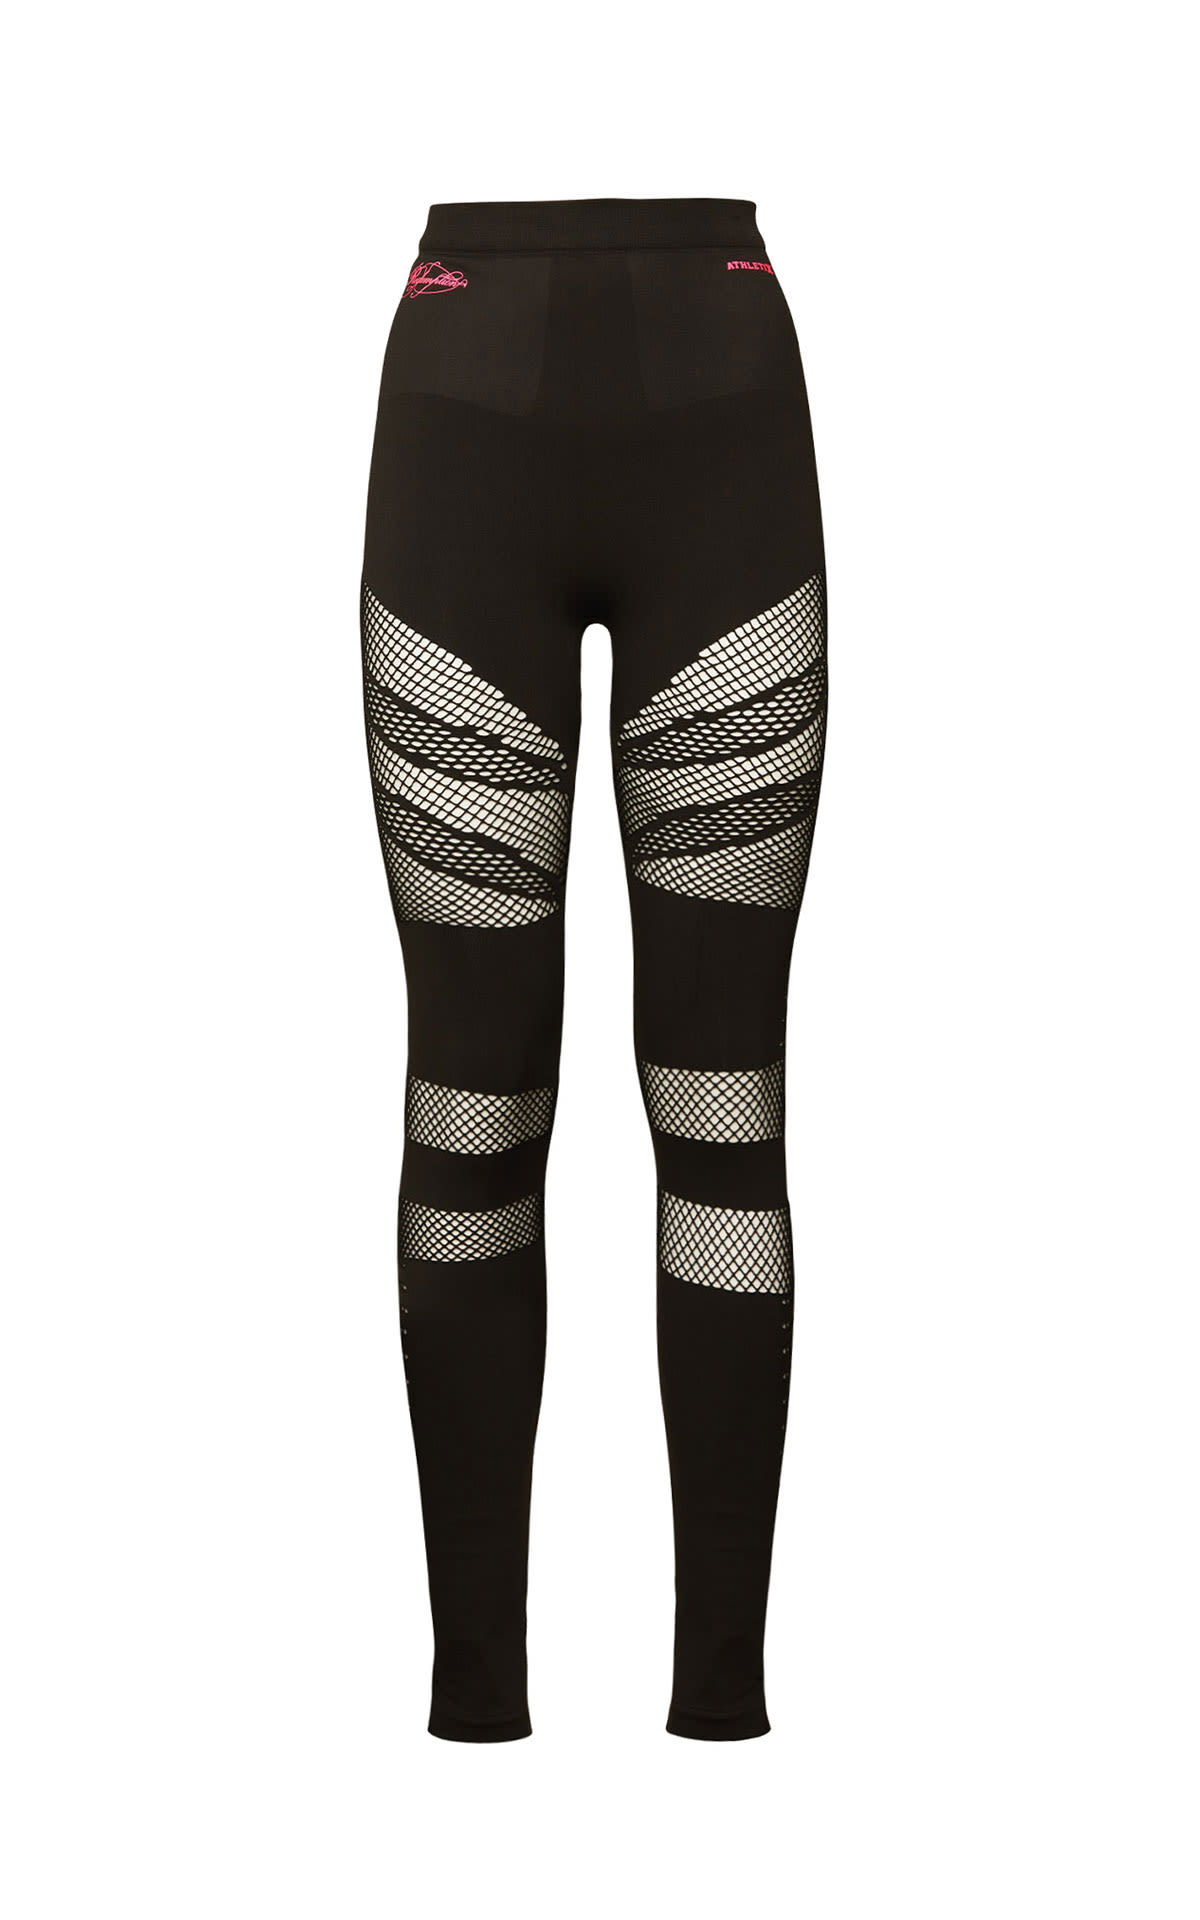 Redemption Athletix Black leggings seamless in regenerated nylon from Bicester Village